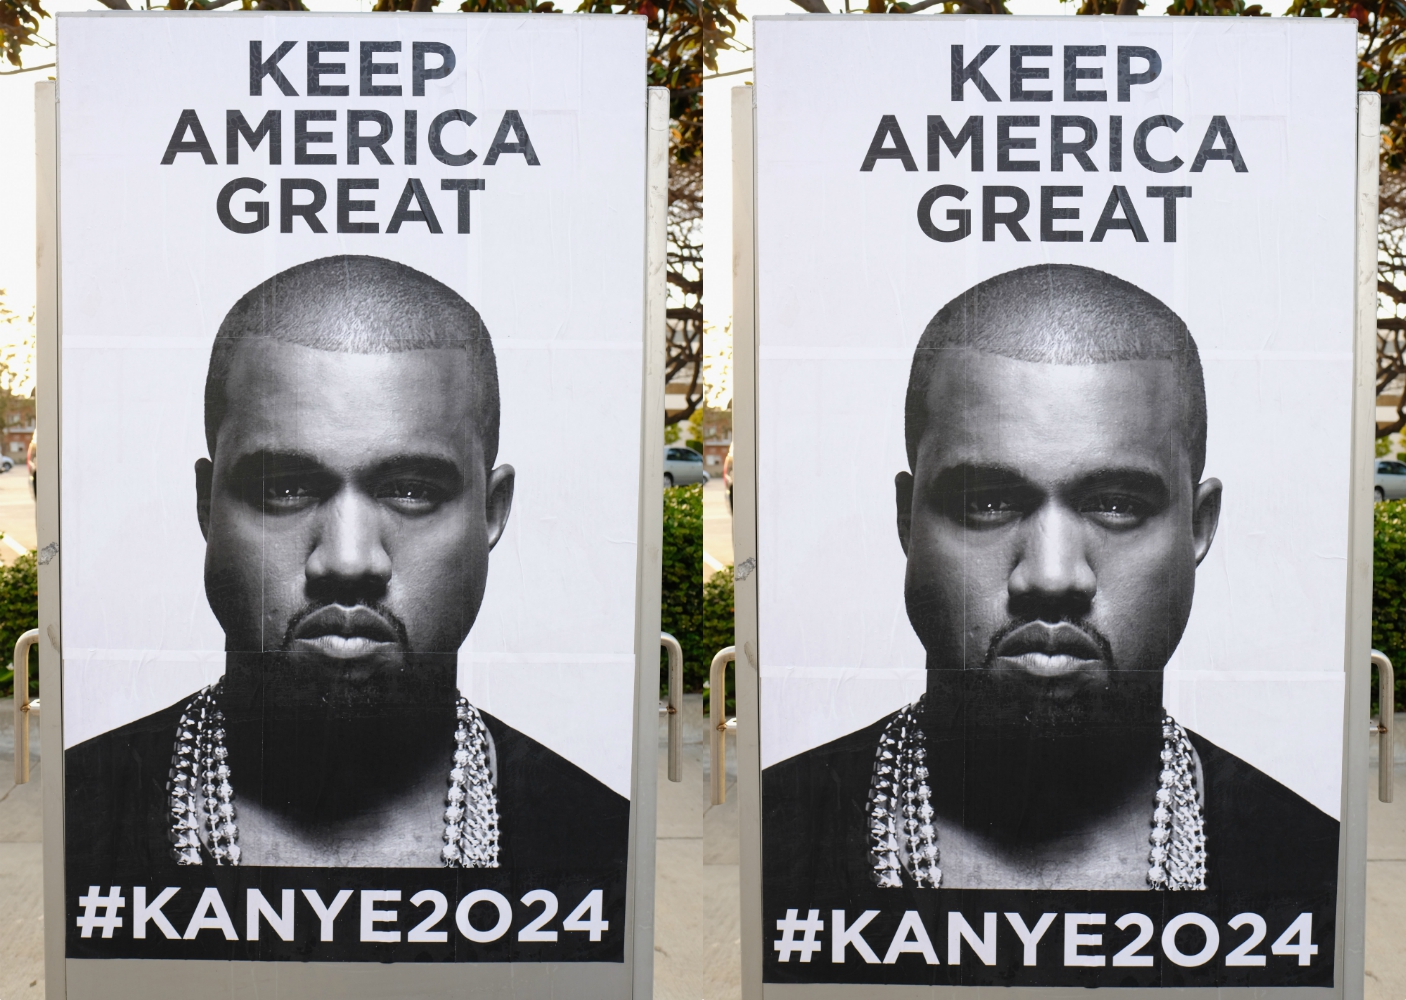 Koonye West 2024 Kanye Kampaigns To "Keep America Great" And Signs